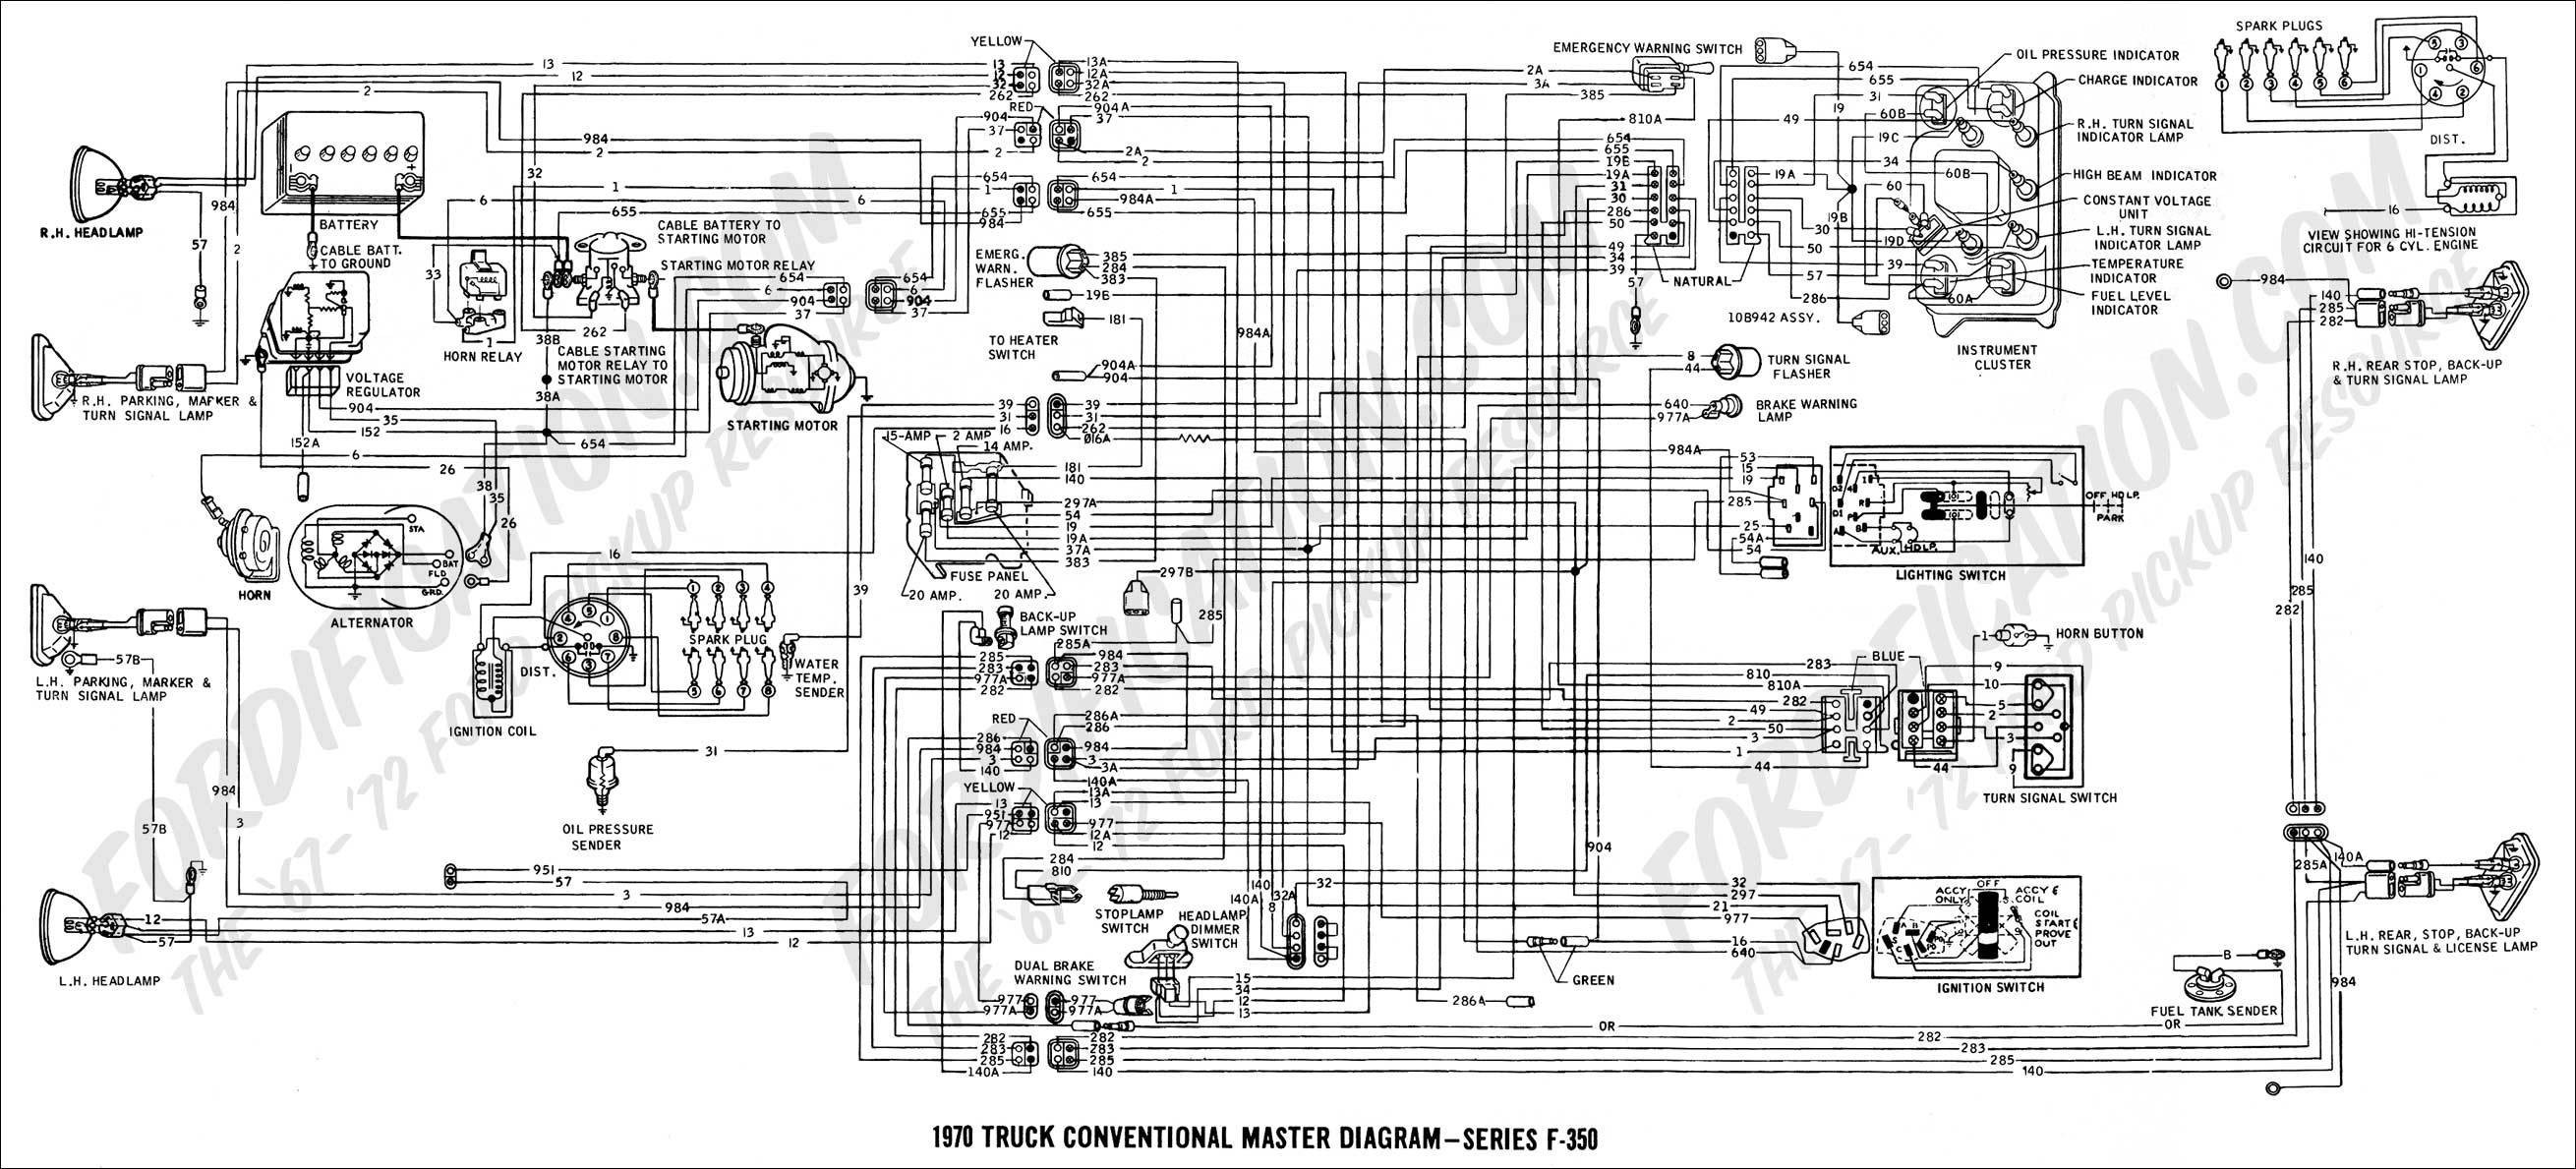 Peterbilt Wiring Diagram Free Awesome Car Electrical Wiring Kenworth Truck Light Wiring Diagram